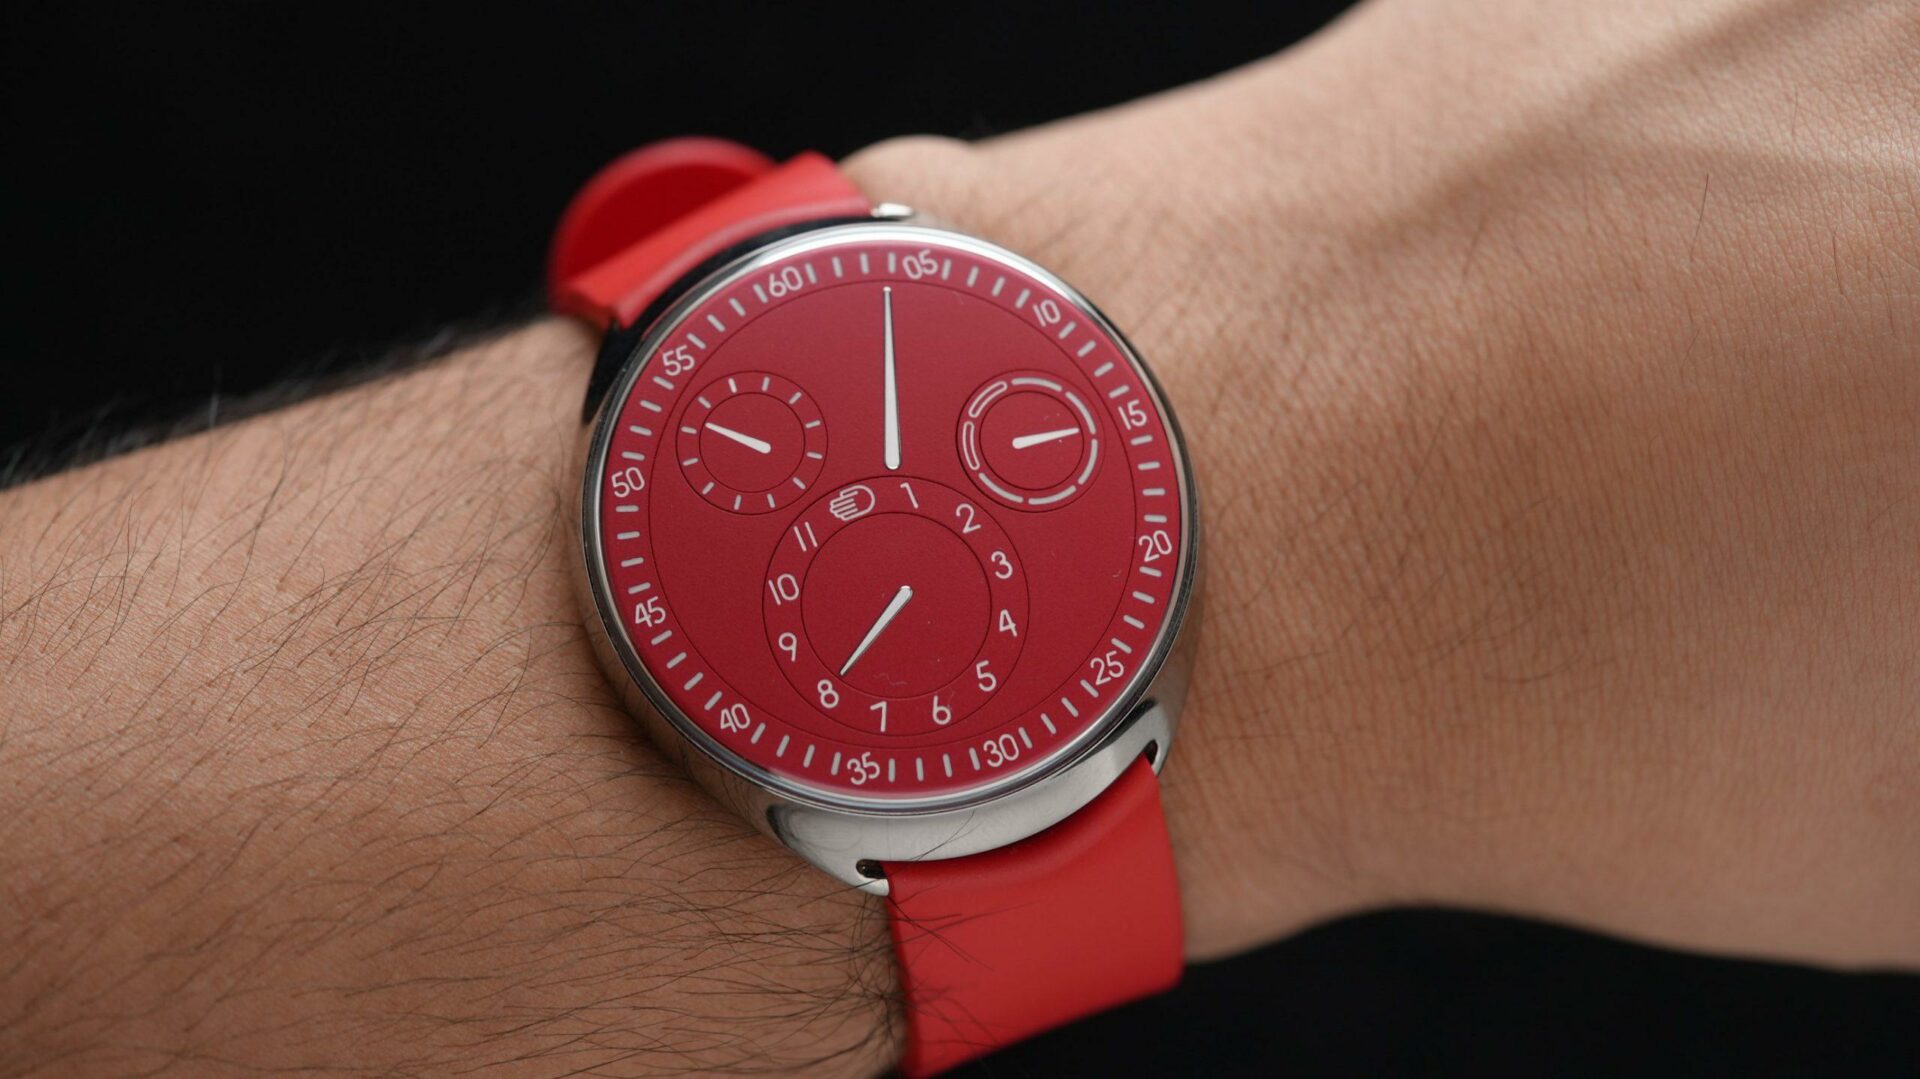 Ressence Type 1 Slim Red being displayed on wrist.